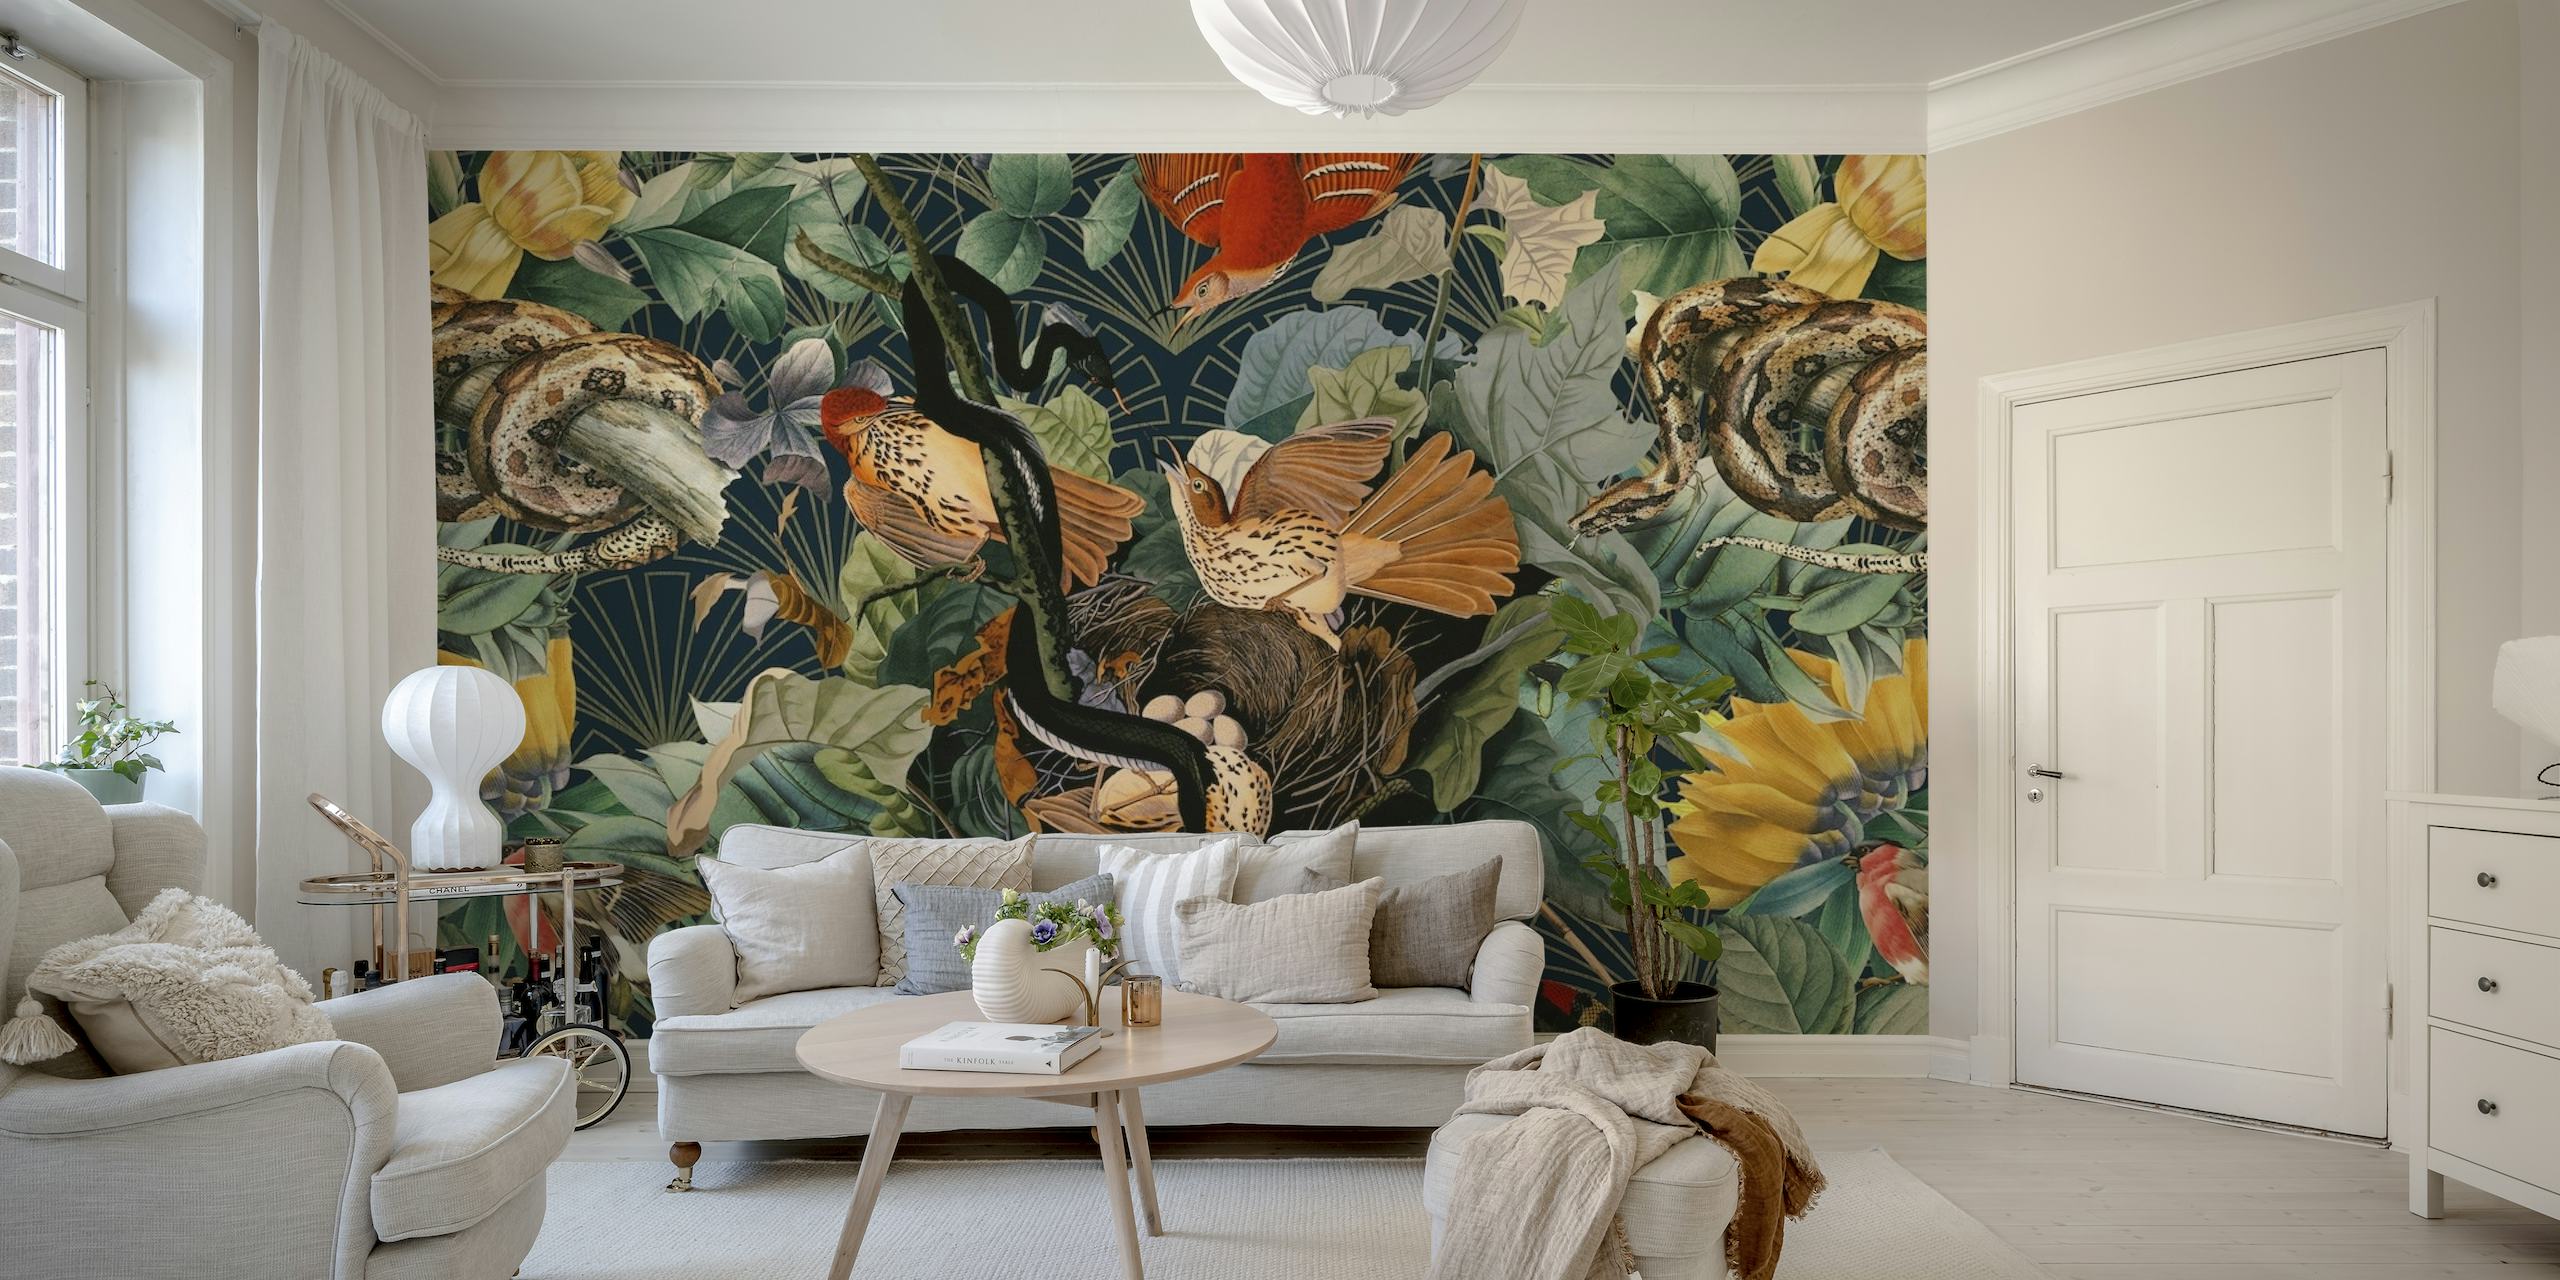 Živahni zidni mural s egzotičnim pticama i zmijama usred bujnog zelenila